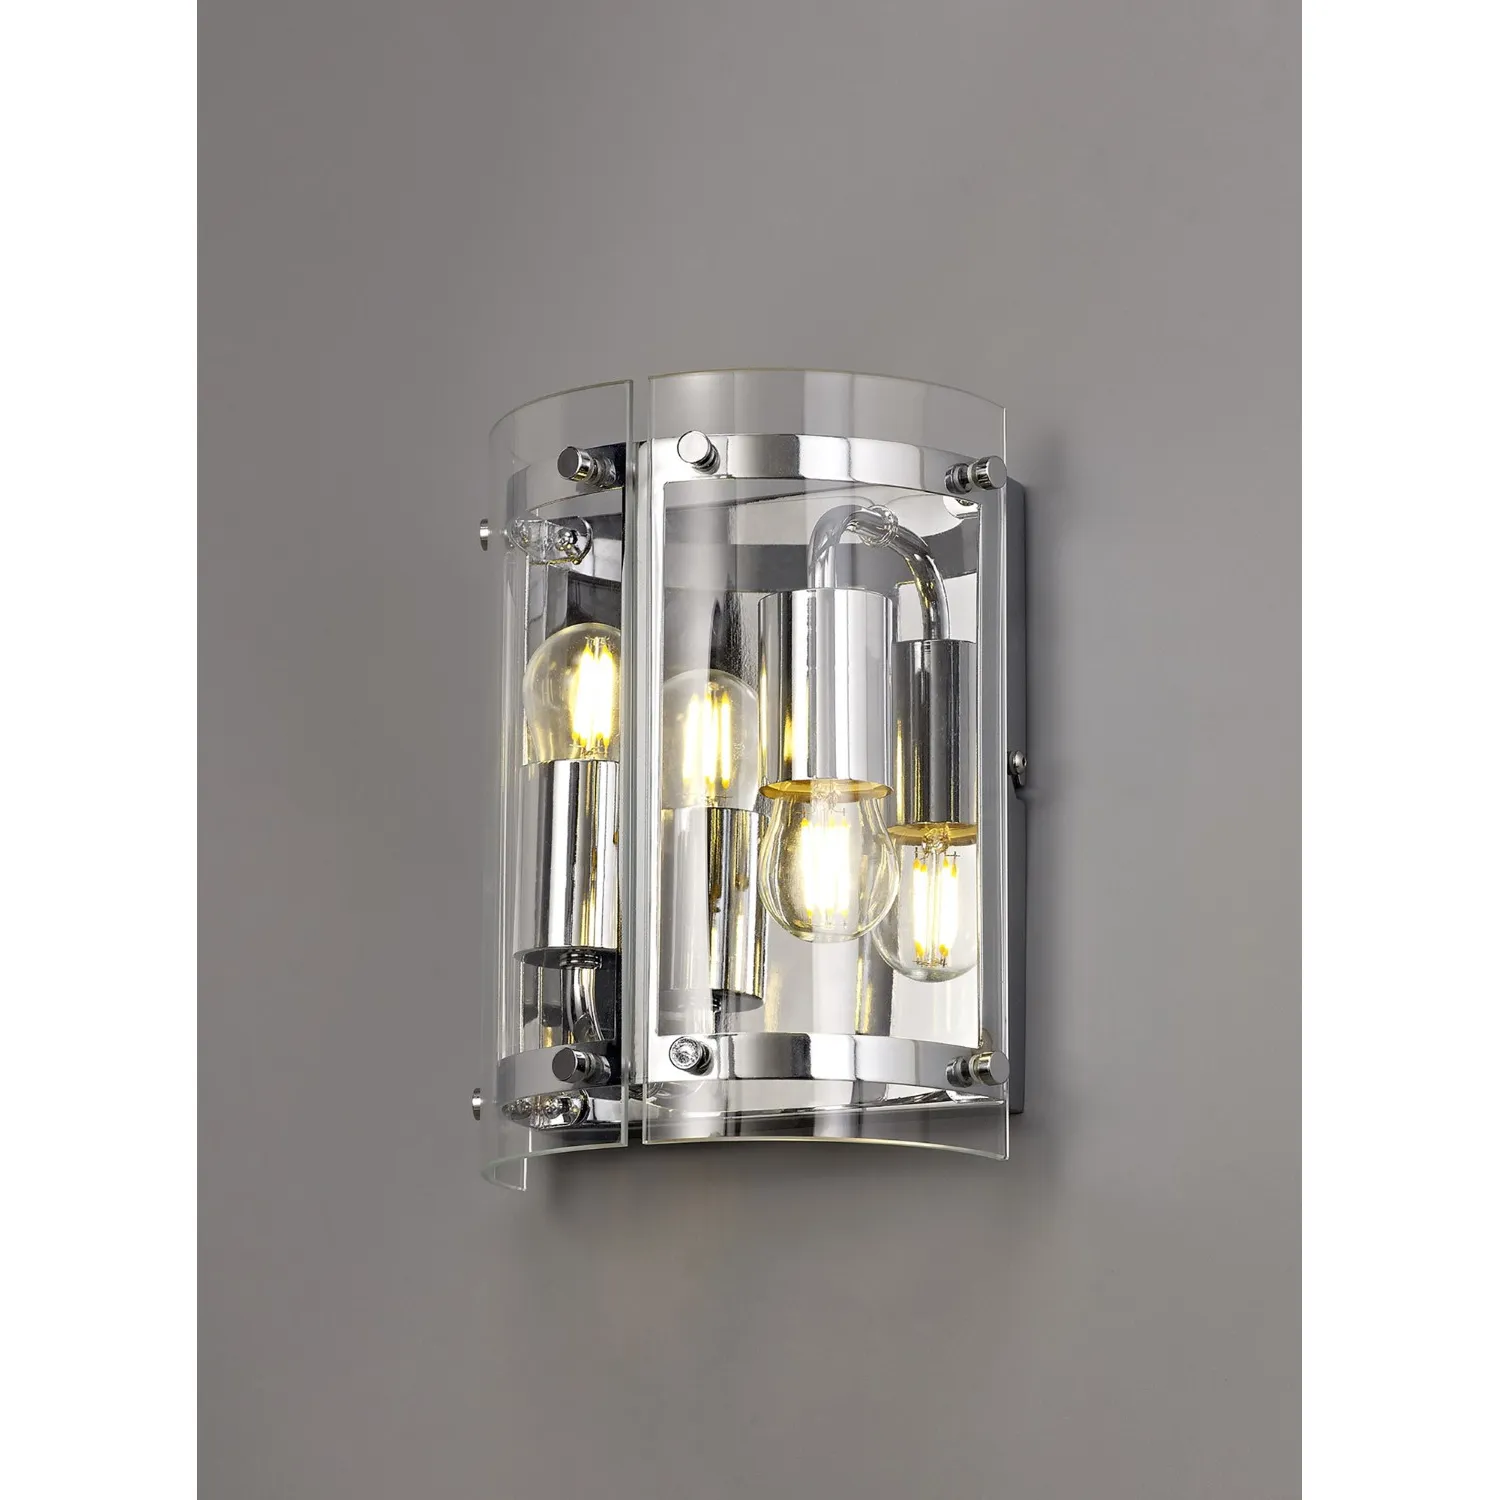 Midhurst Wall Light, 2 Light E27, Polished Chrome